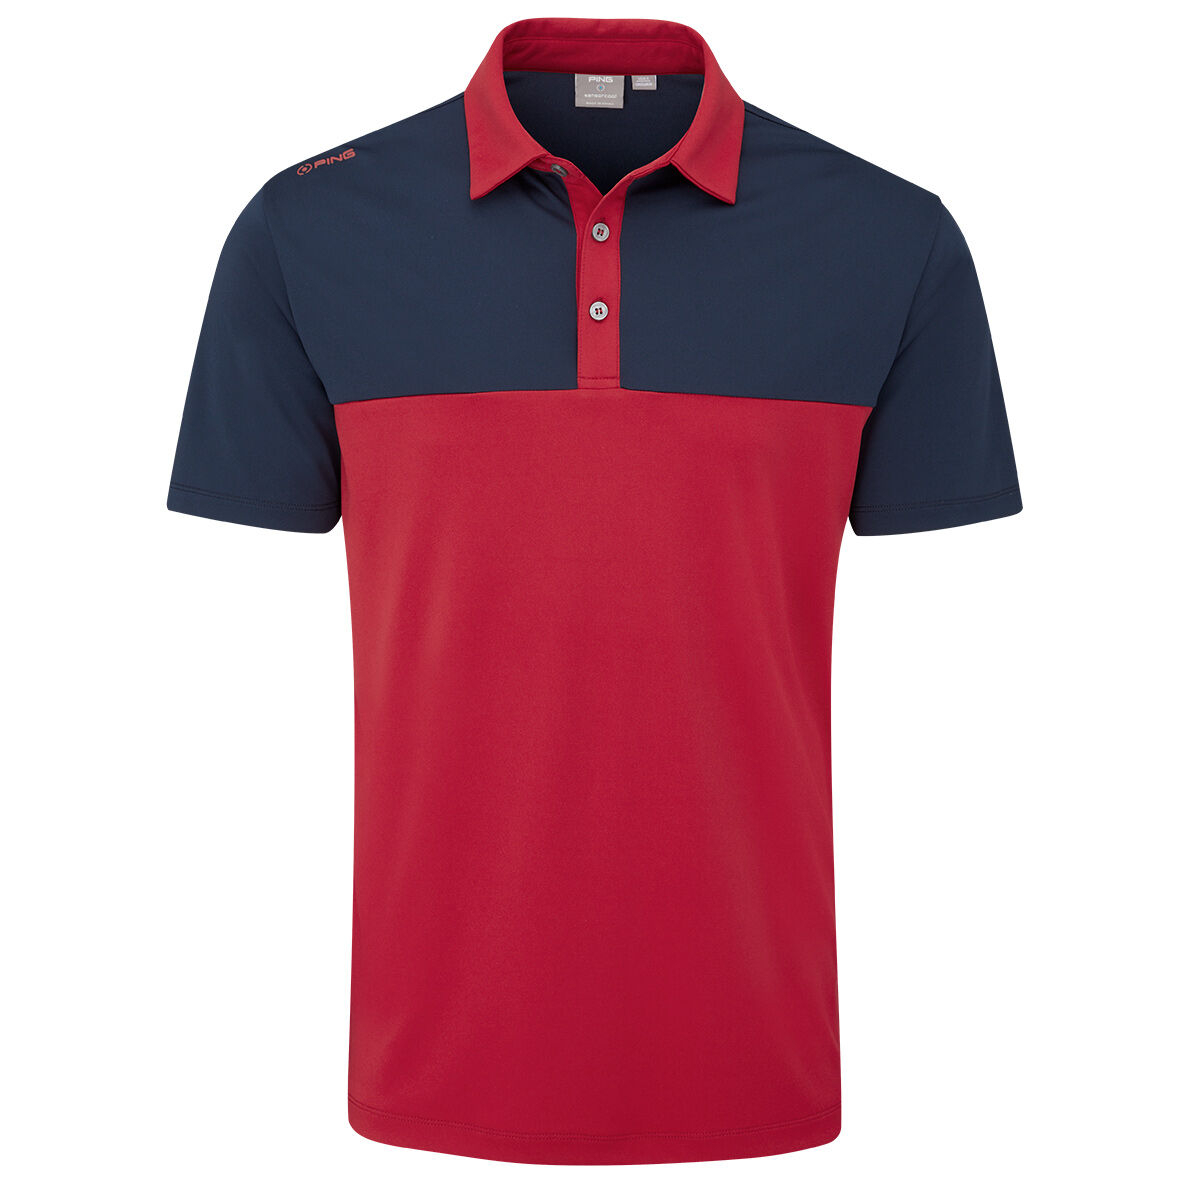 PING Men’s Bodi Panel Golf Polo Shirt, Mens, Rich red/navy, Large | American Golf